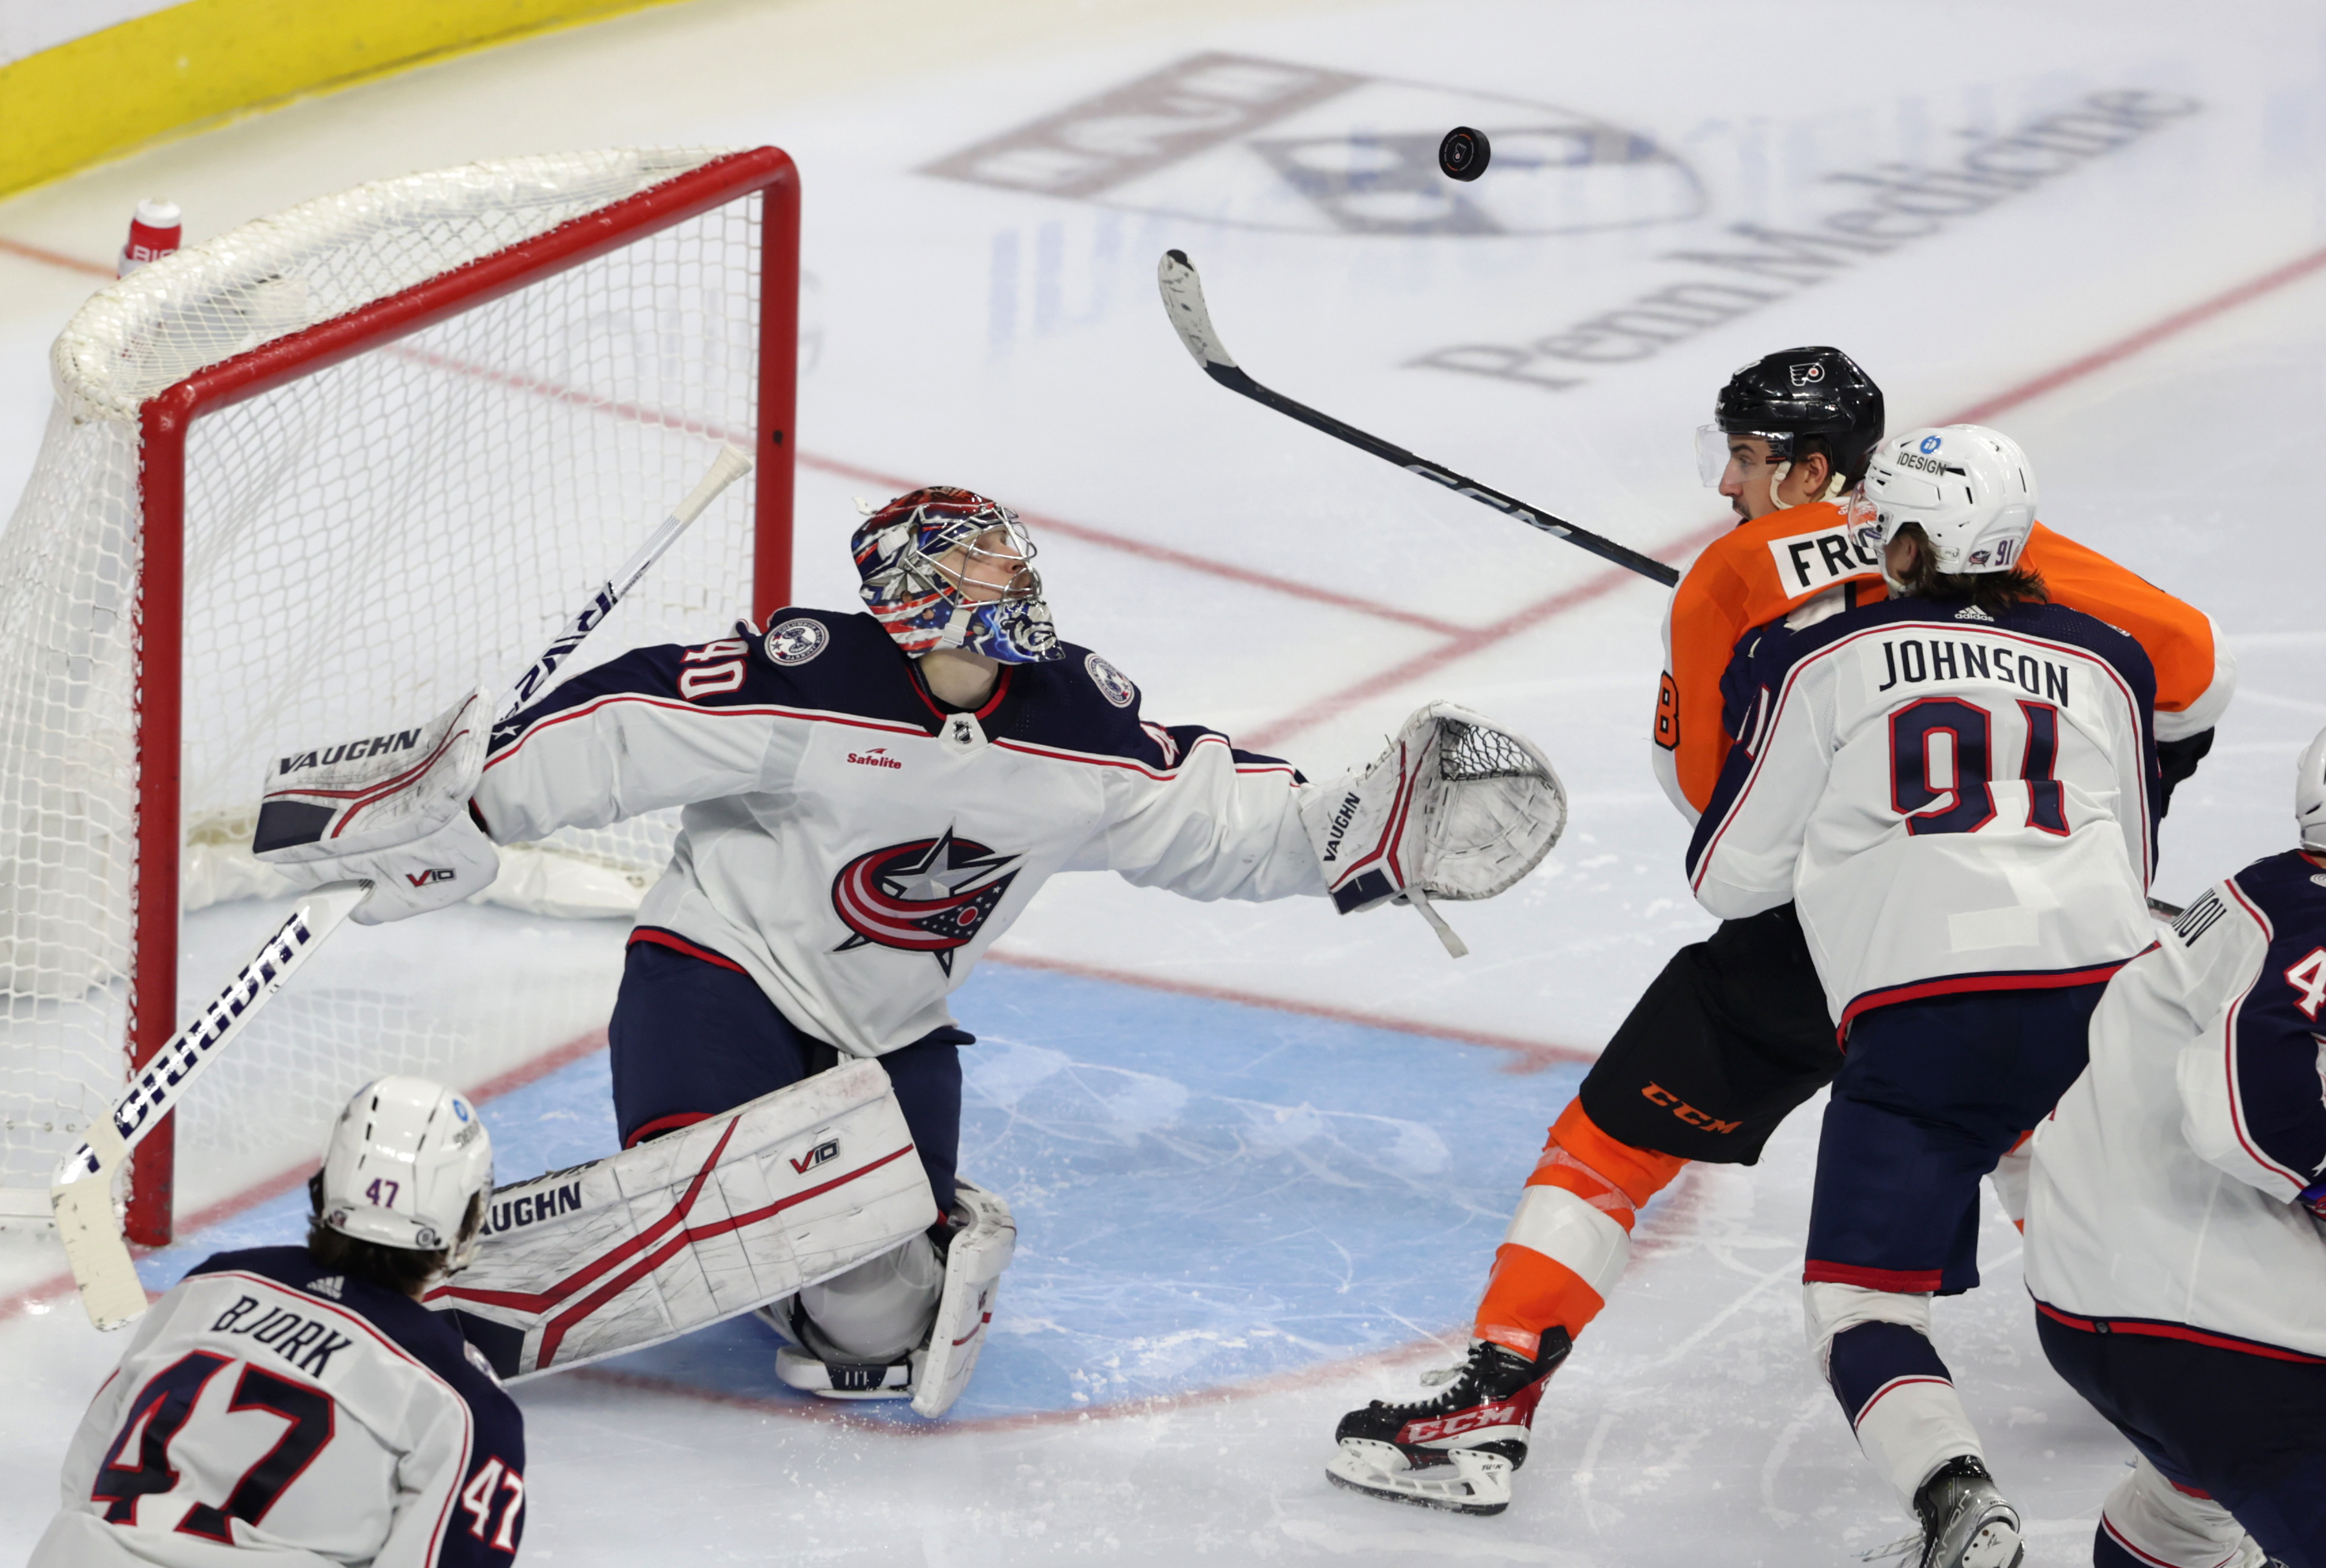 5 Flyers-Isles observations: Travis Konecny gets (odd) milestone goal, but  losing streak reaches 8